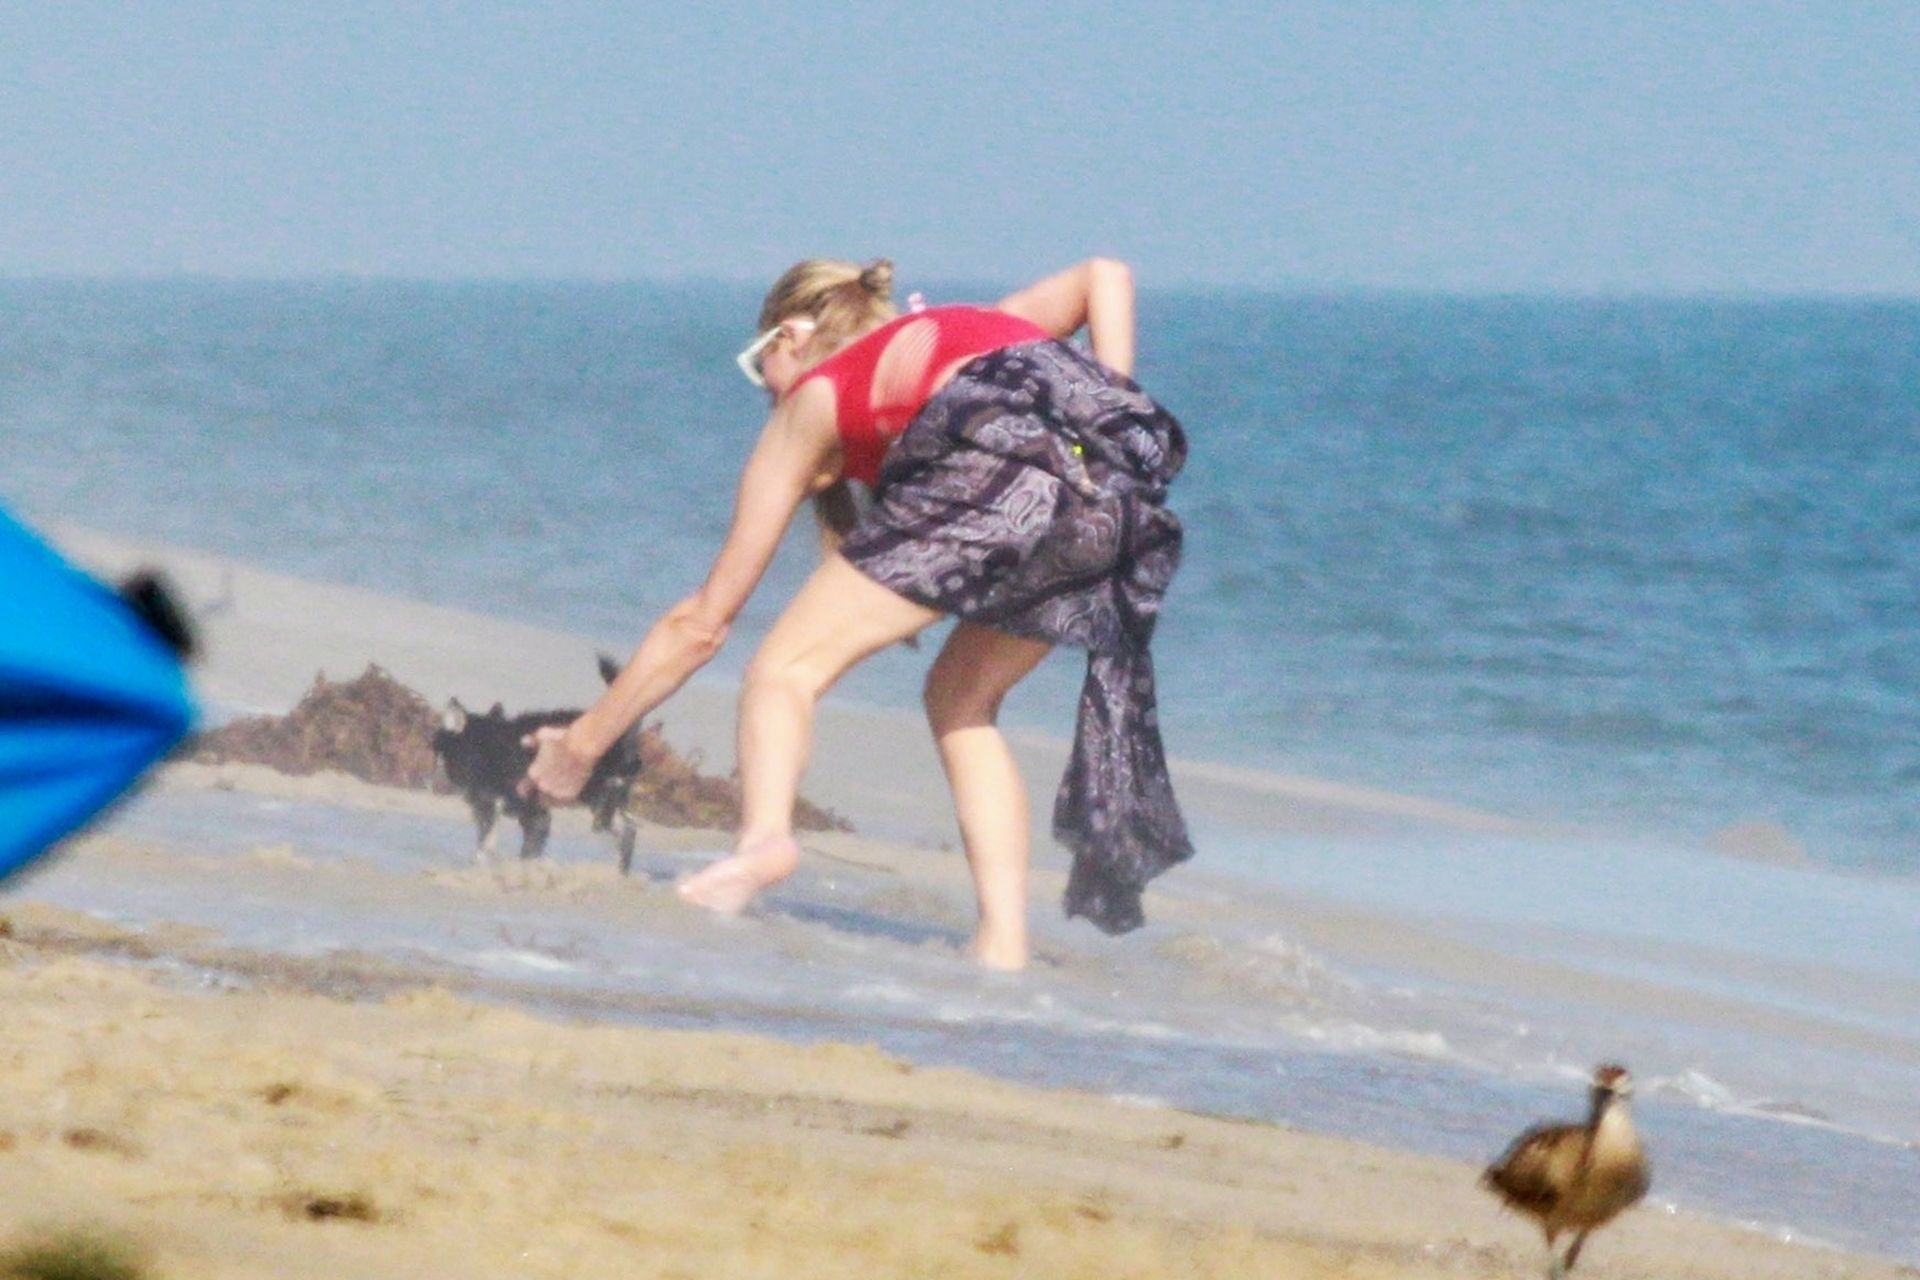 Paris Hilton & Carter Reum Enjoy a Beach Day with Friends (51 Photos)